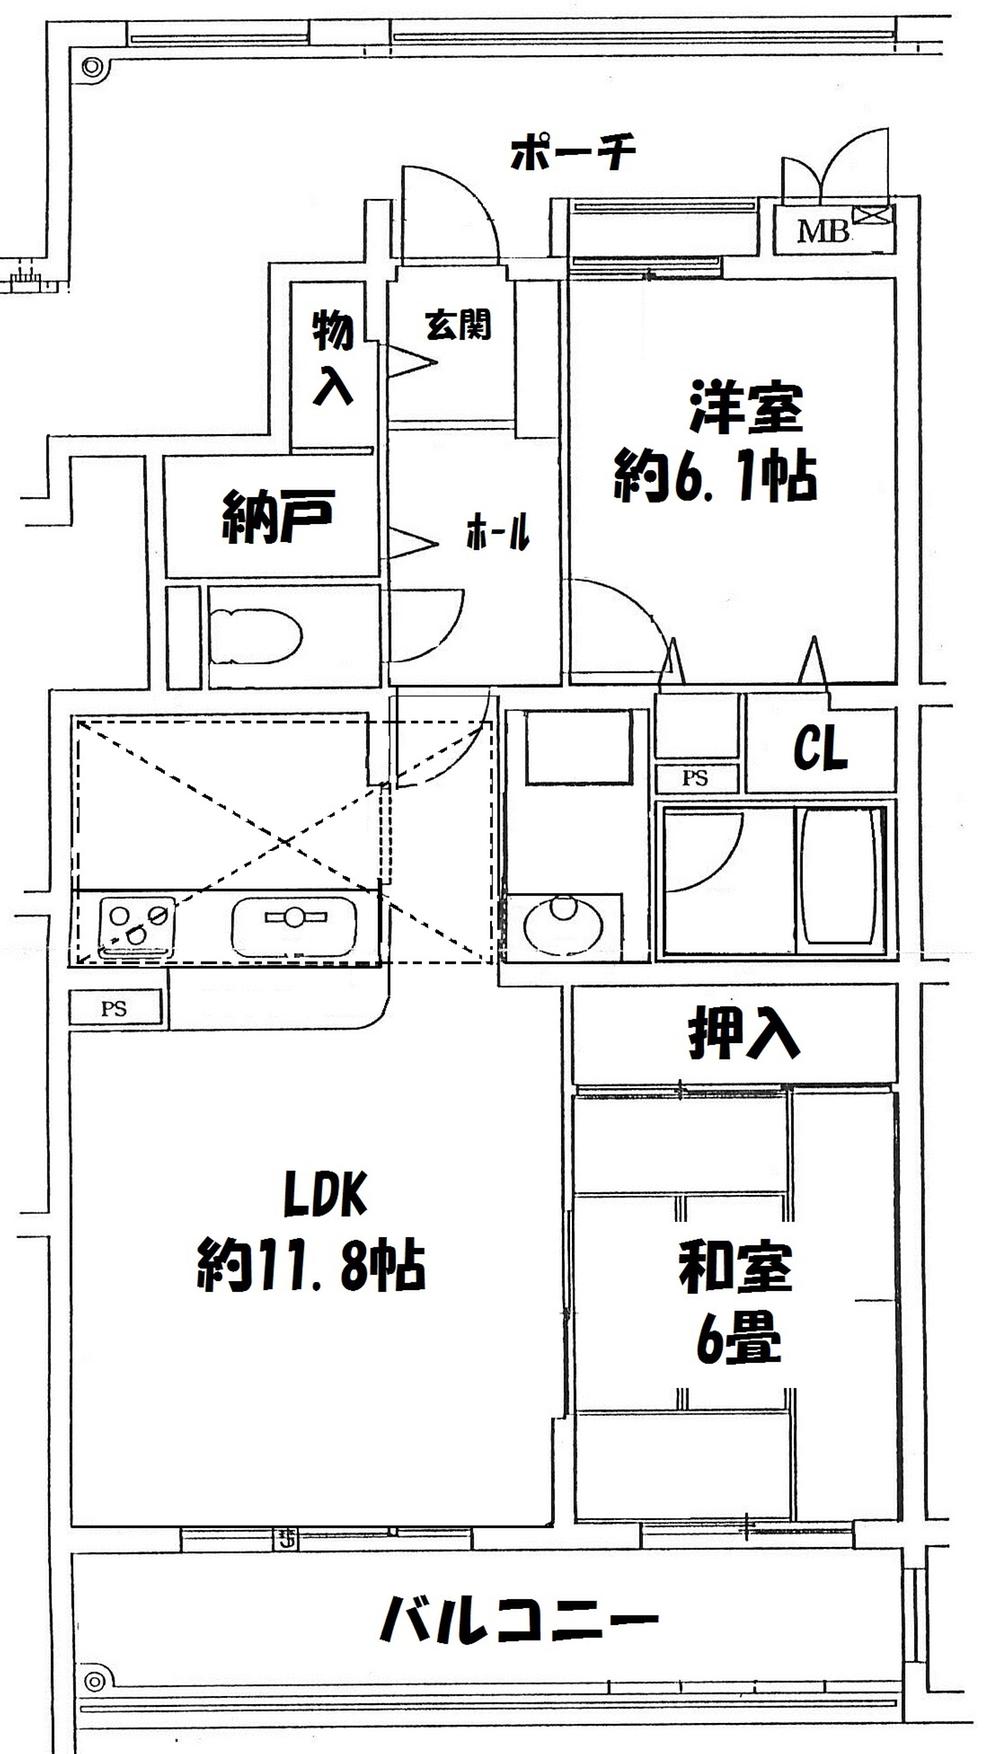 Floor plan. 2LDK + 2S (storeroom), Price 9.38 million yen, Footprint 66.8 sq m , Balcony area 10.5 sq m